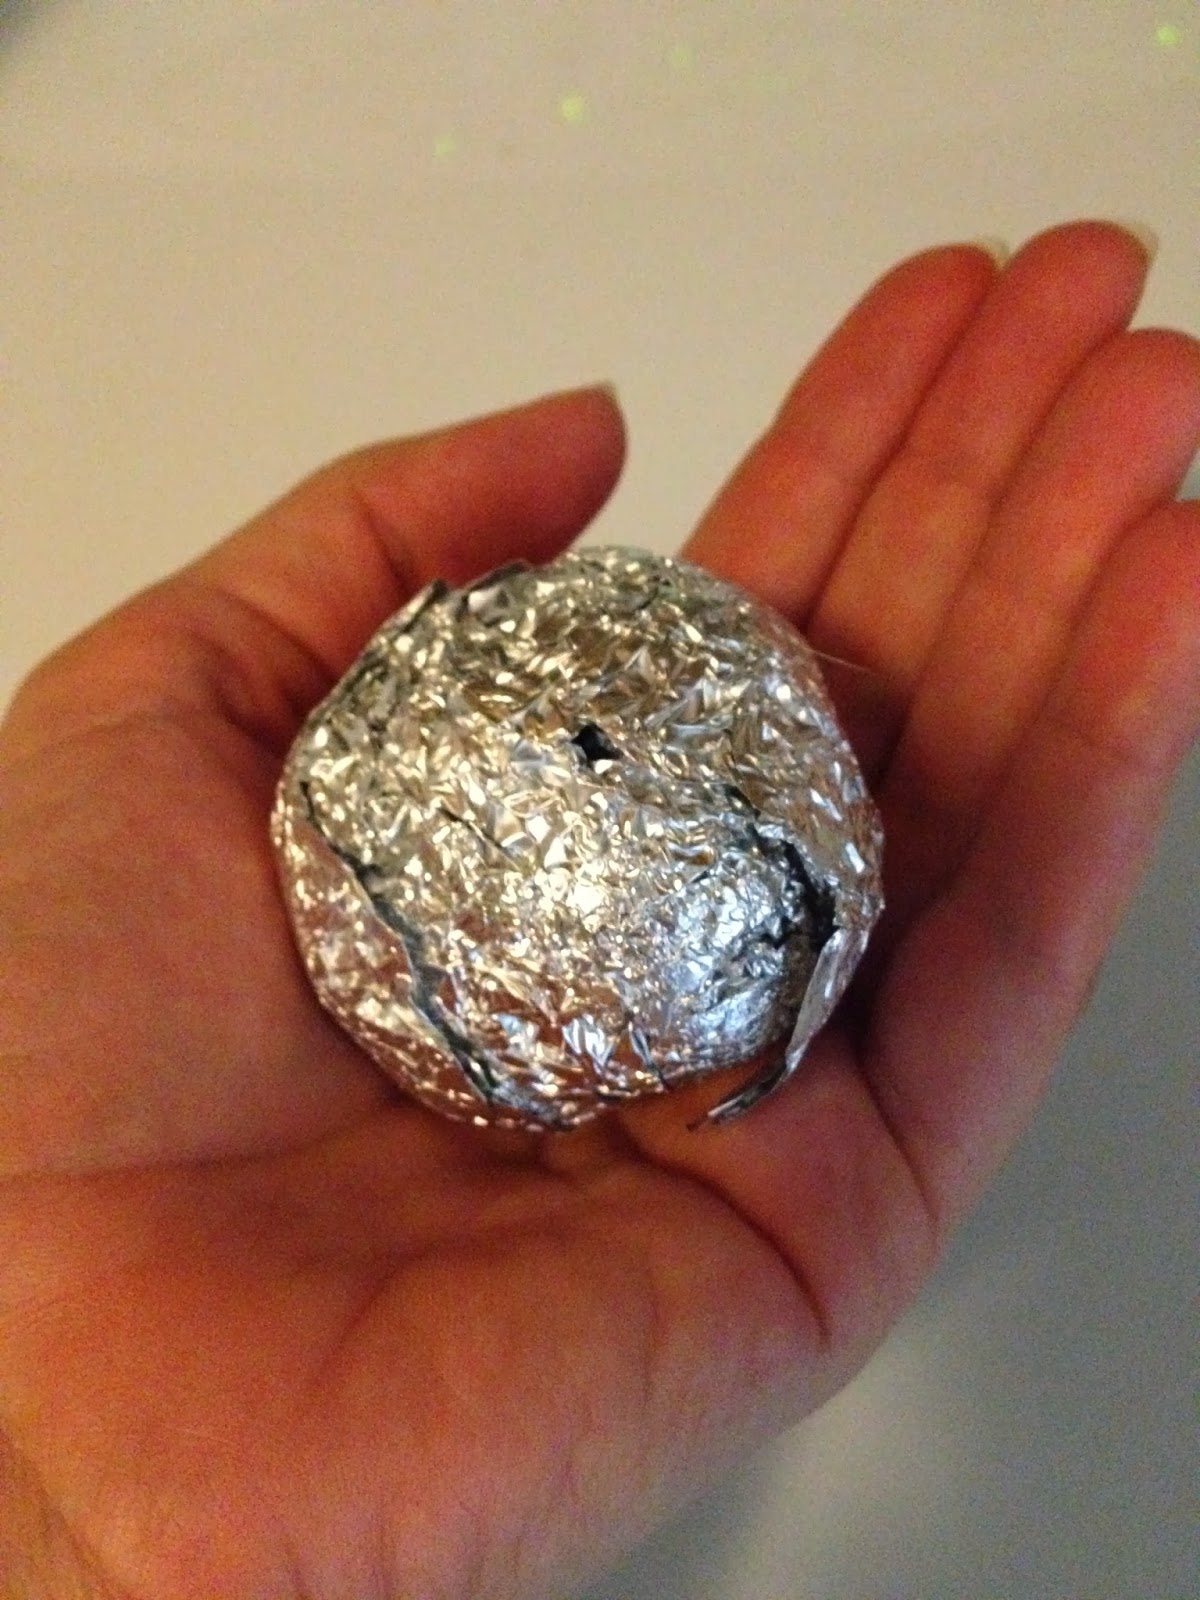 The Diy Guinea Pig Aluminum Foil Dryer Ball